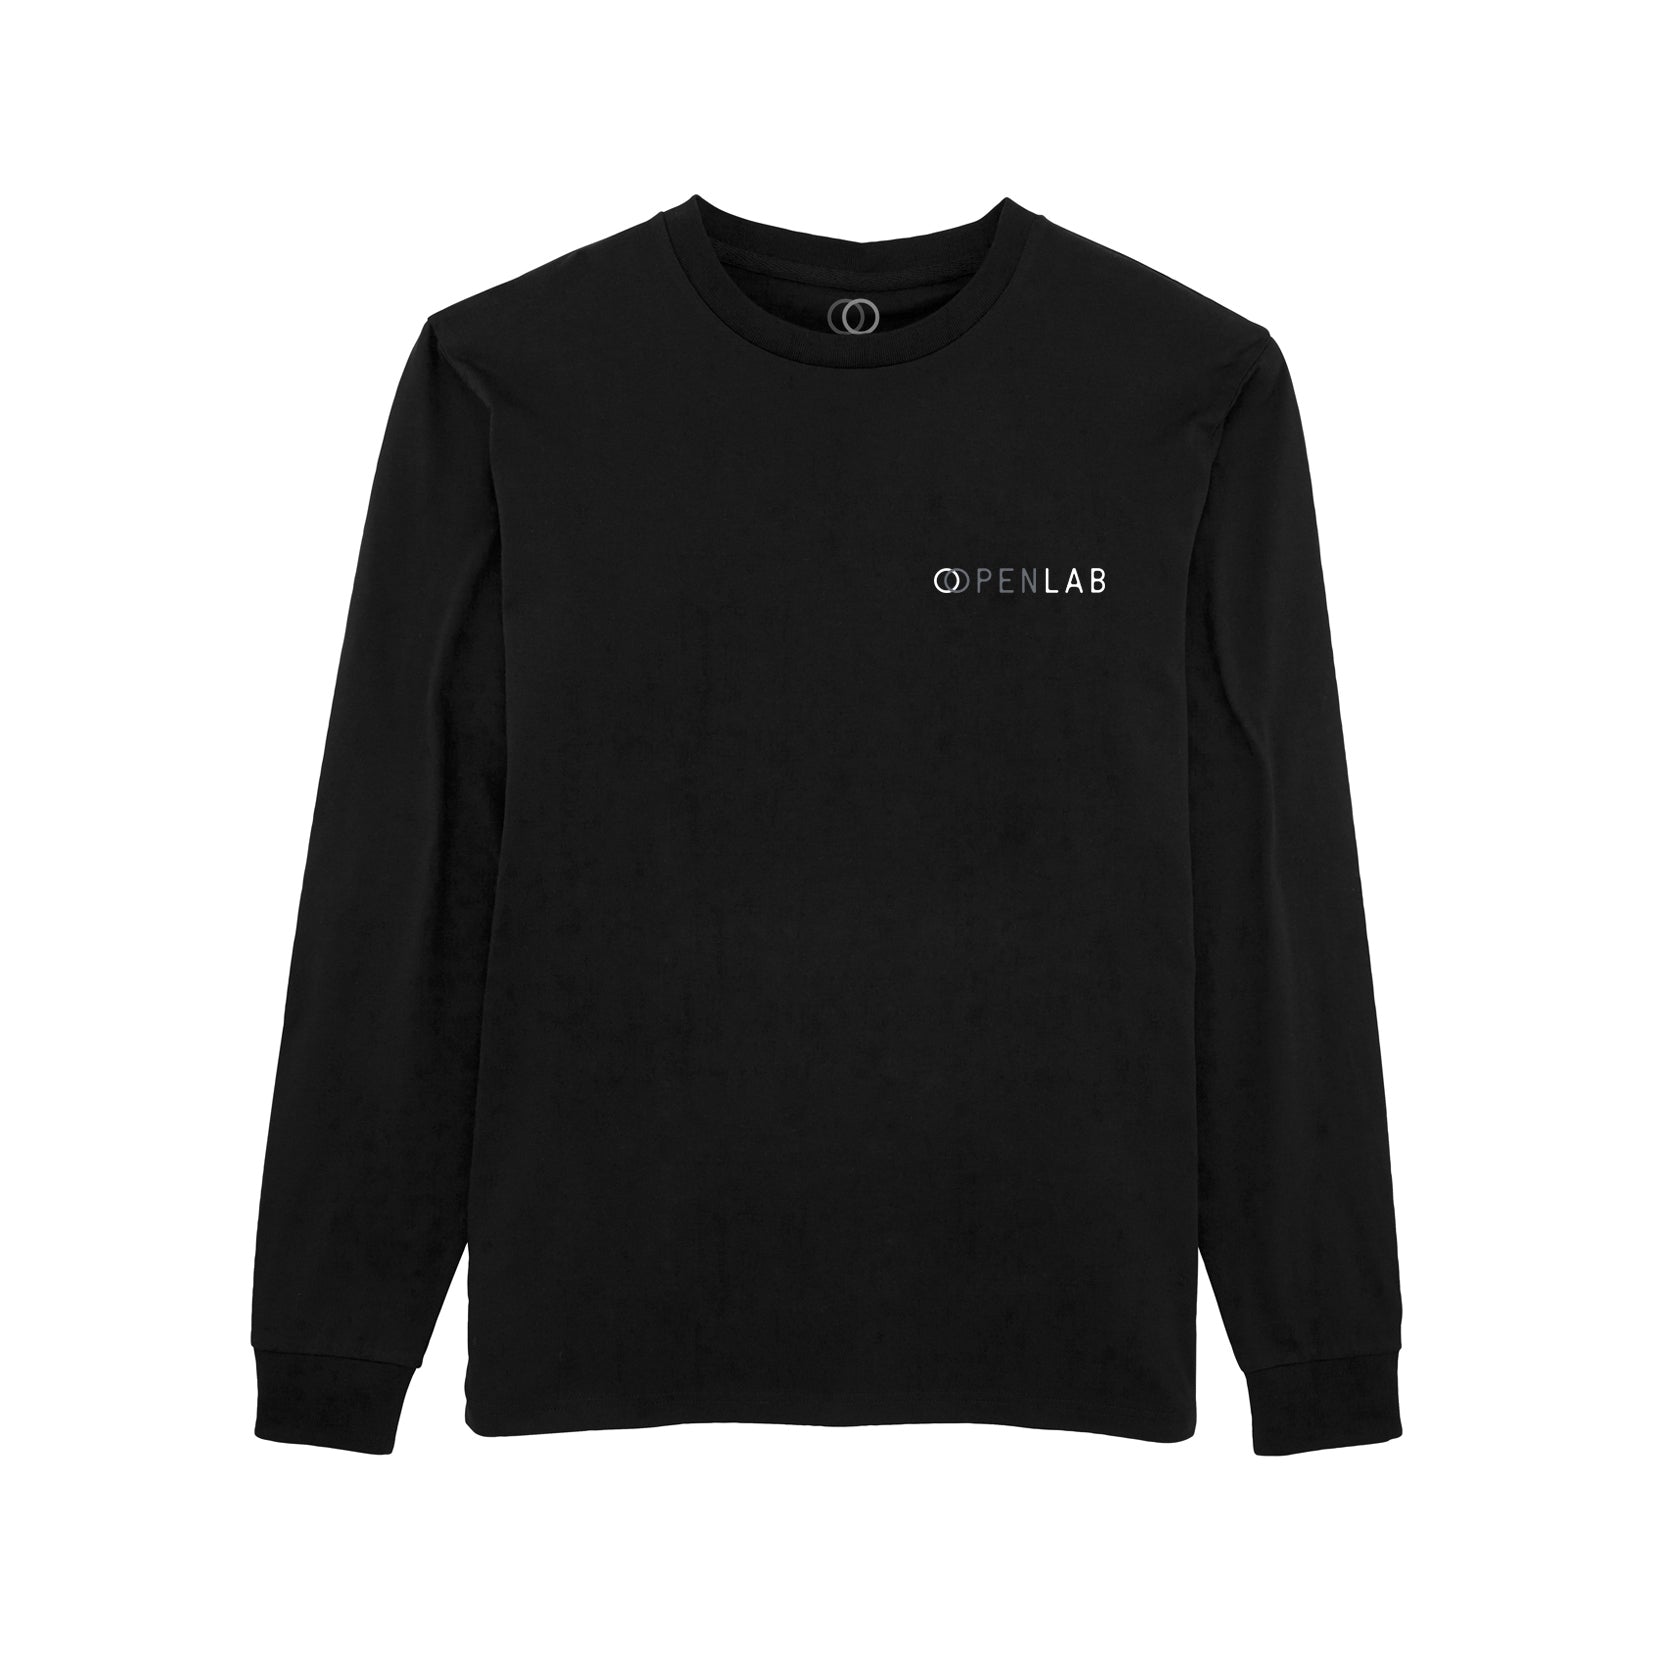 Openlab - L/S T-Shirt